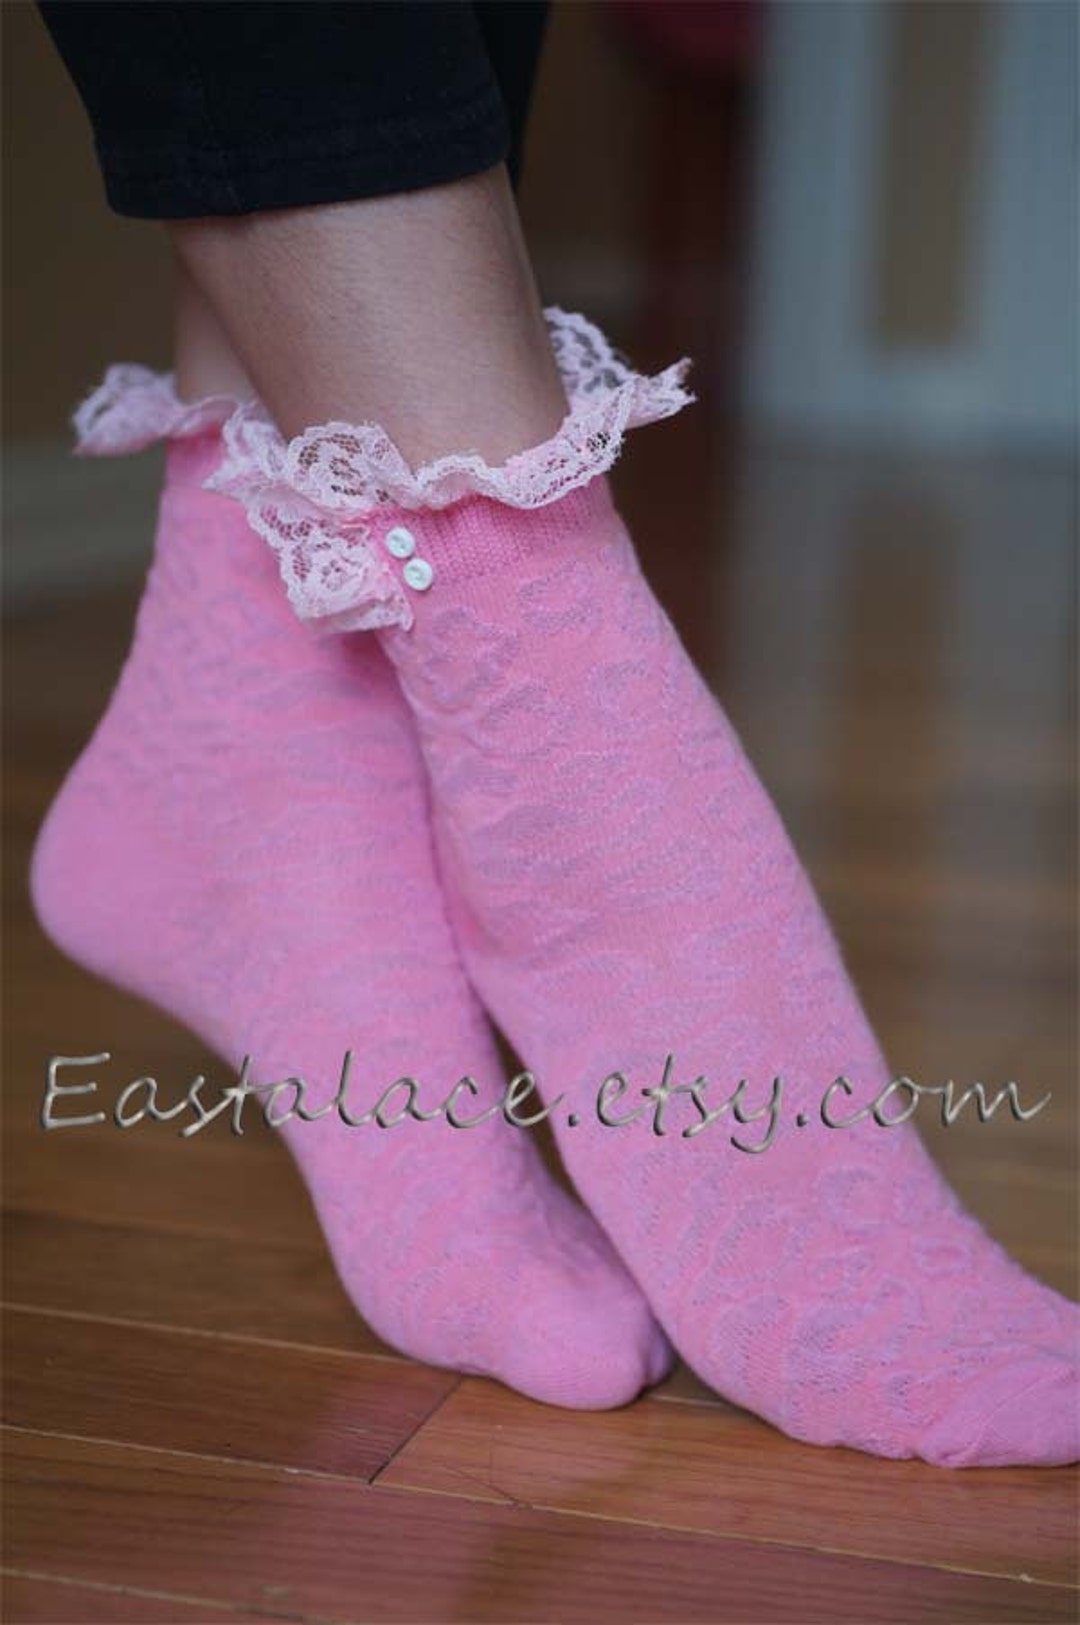 Personalised Flower Girl Socks, Name on Ankle Socks, White, Pink or Blue,  Girls Custom Made Gift Wedding Socks Lace Trim, Child Clothing 